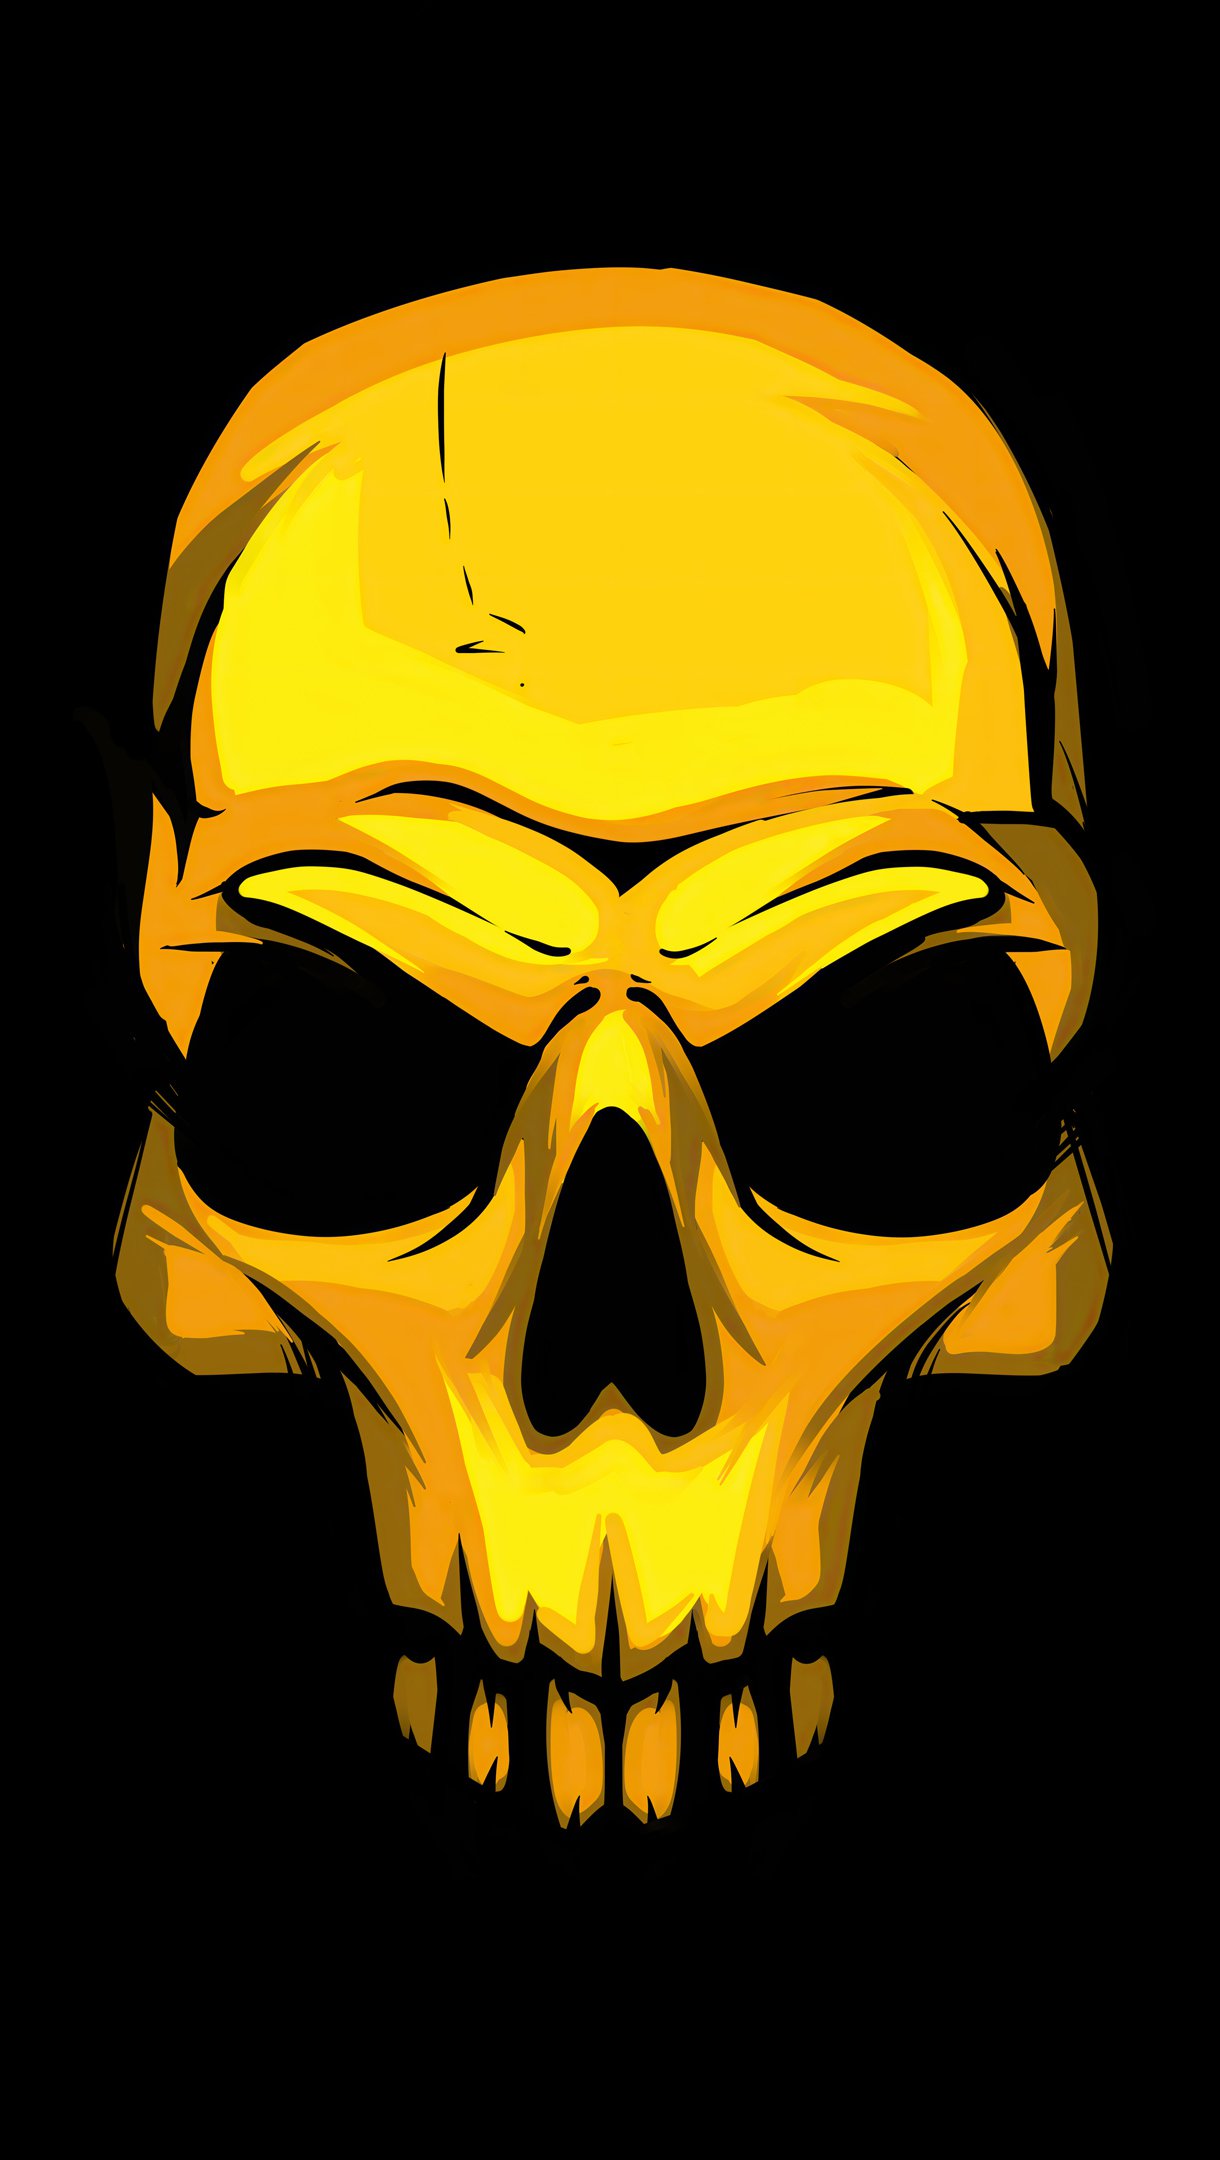 Gold skull Wallpaper 4k Ultra HD ID:5399